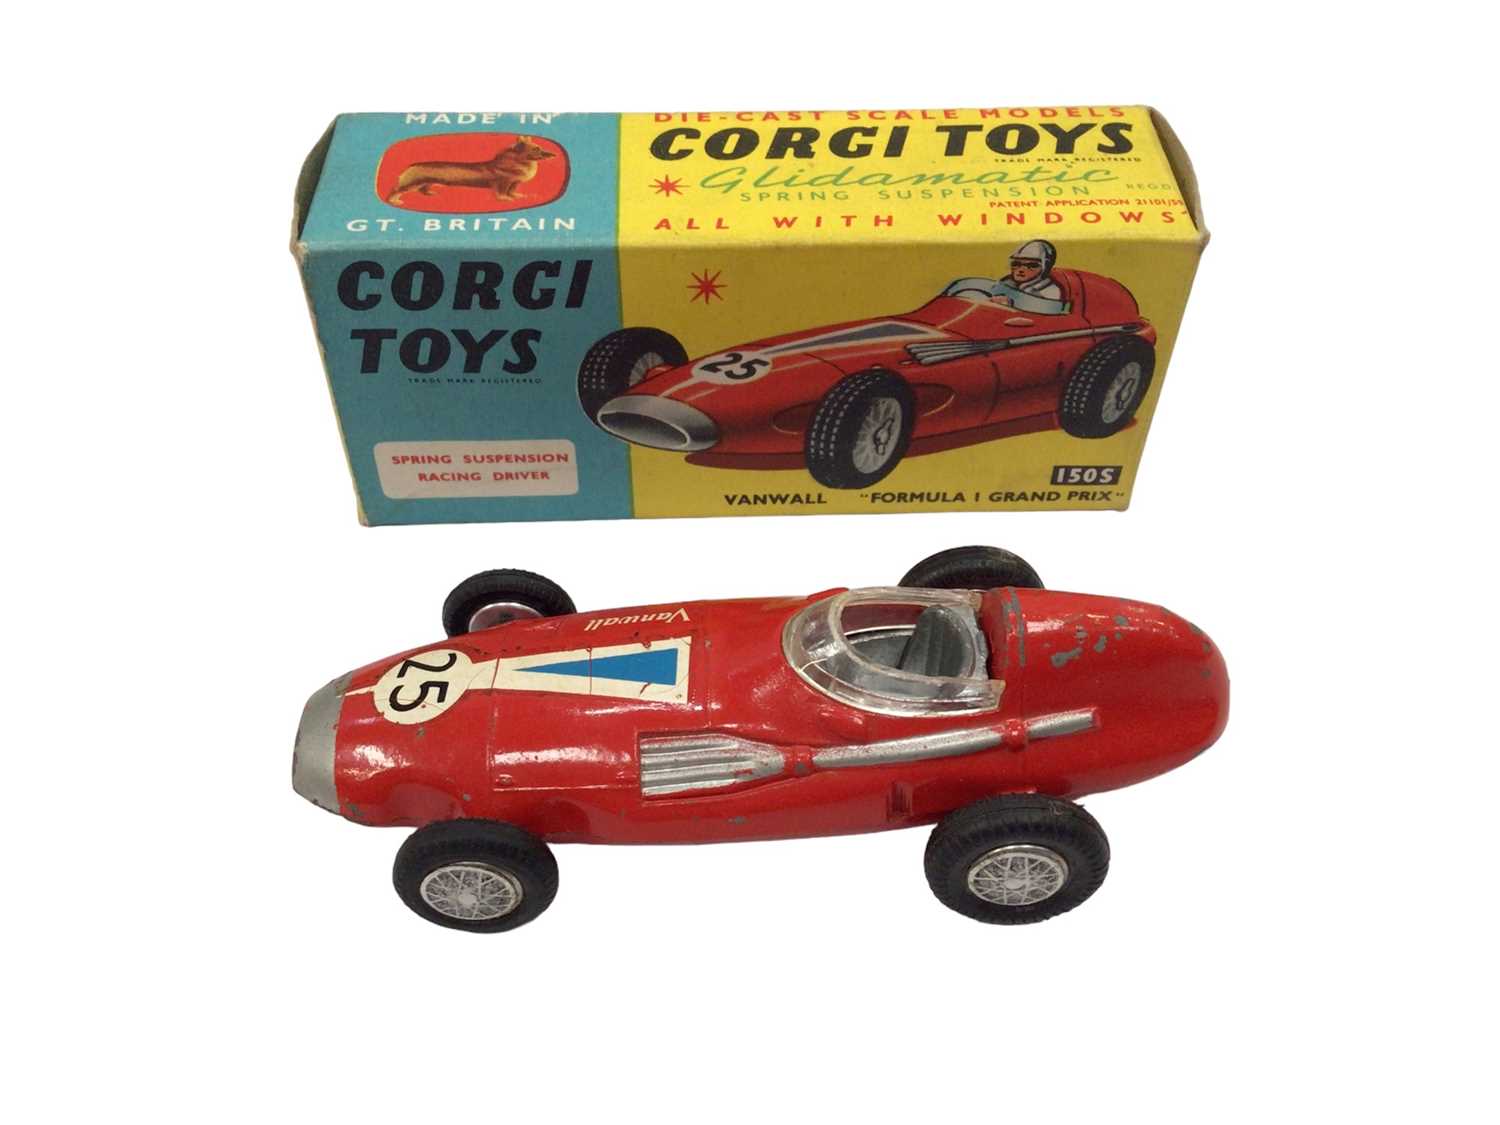 Corgi Major Ecurie Ecosse gift set No. 16 in original box - Image 5 of 6